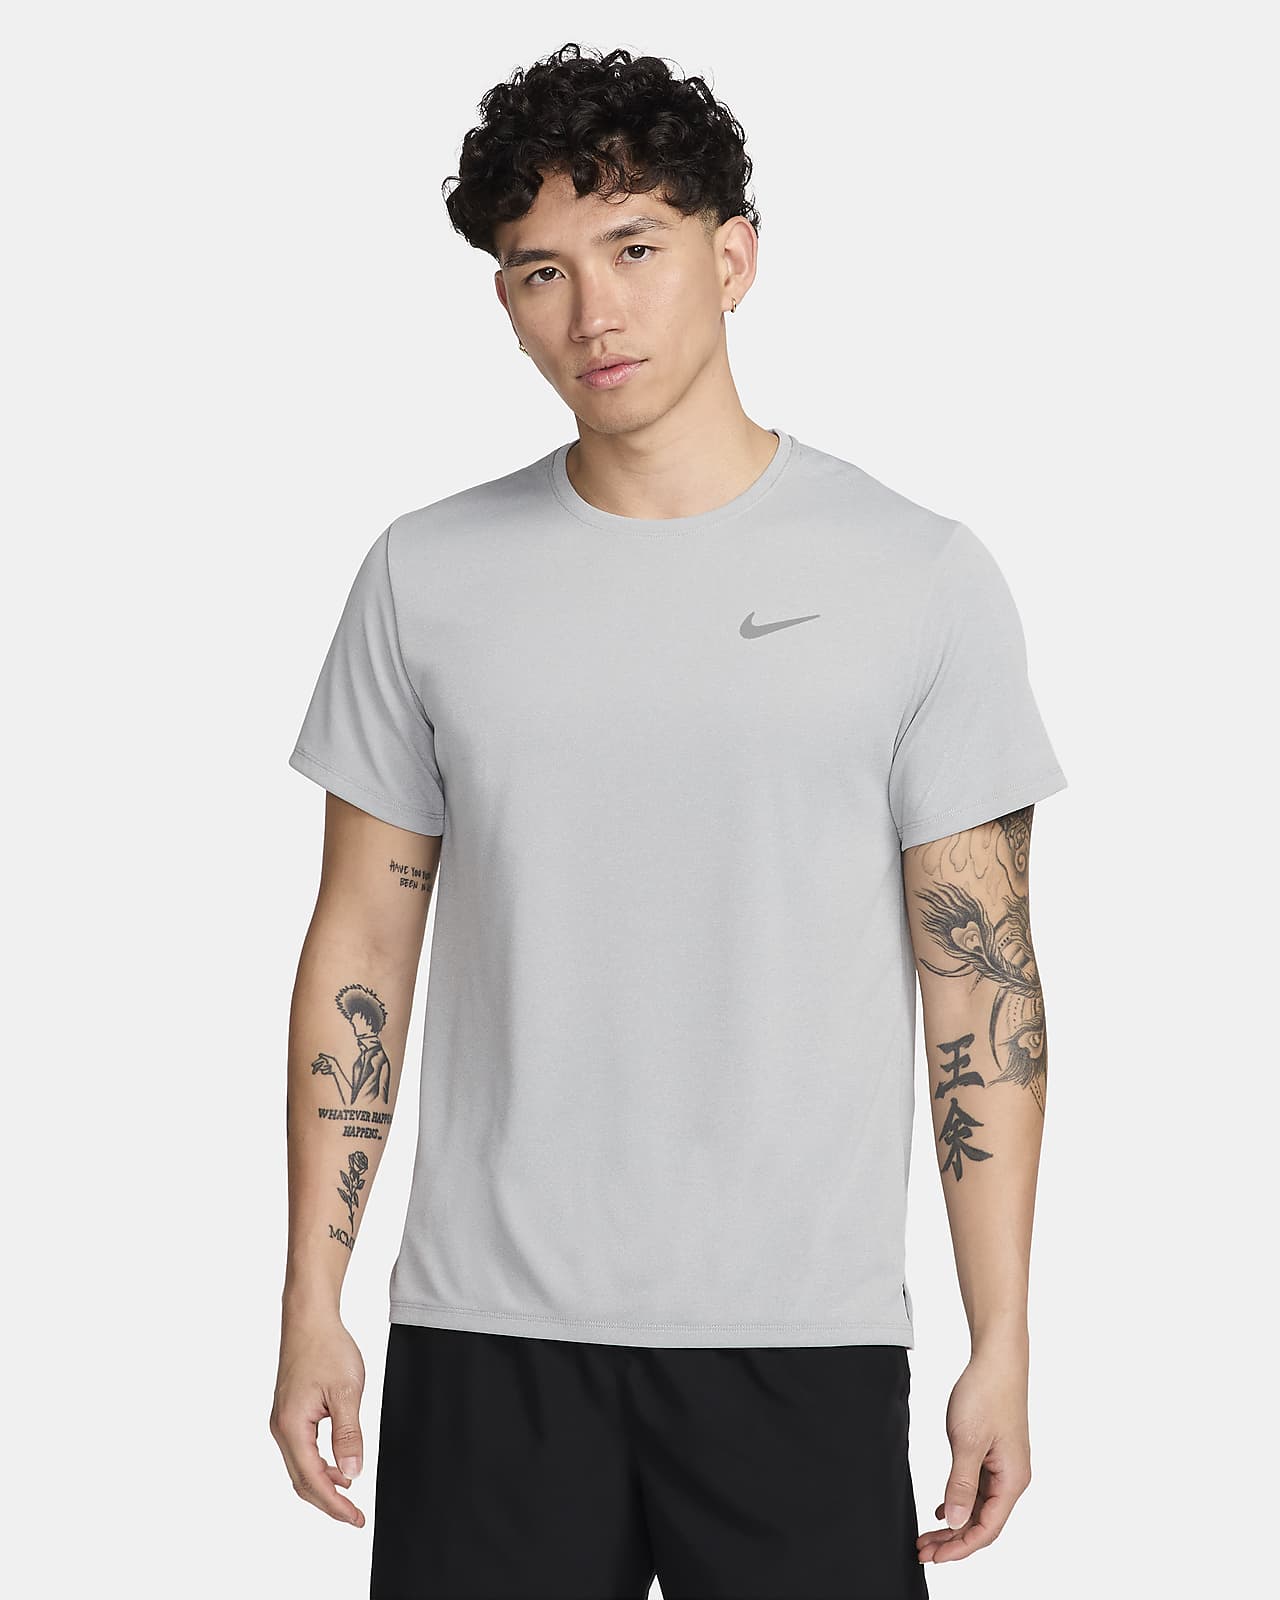 Nike Dri-FIT UV Miler Men's Short-Sleeve Running Top